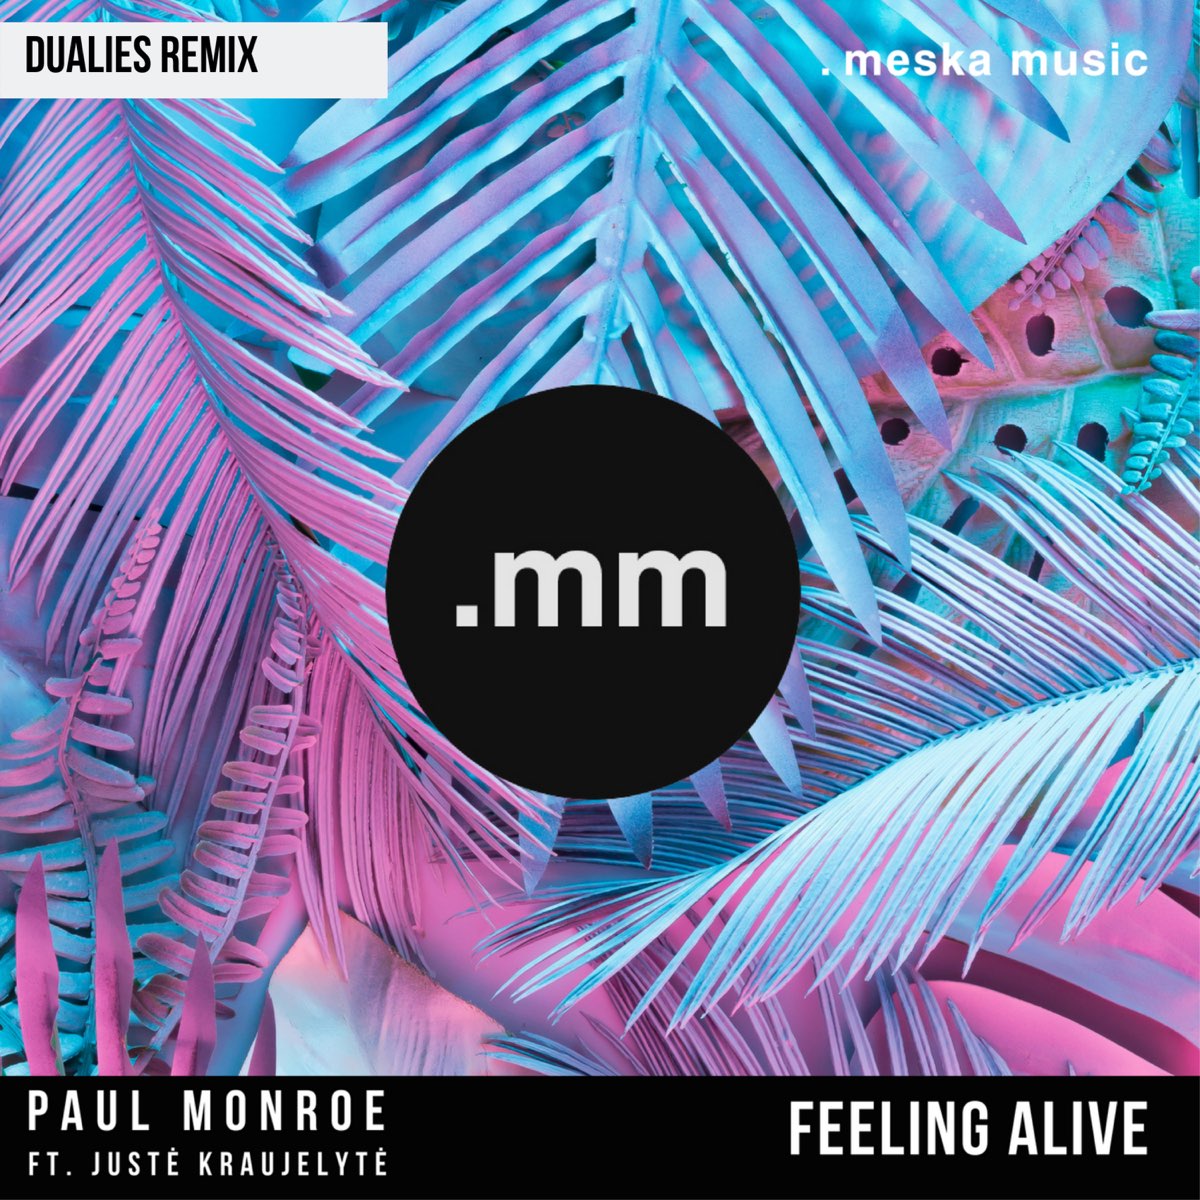 Paul Monroe. Feeling Alive. Grafix - feel Alive (ft. Lauren l'aimant). Toronto feeling Alive.